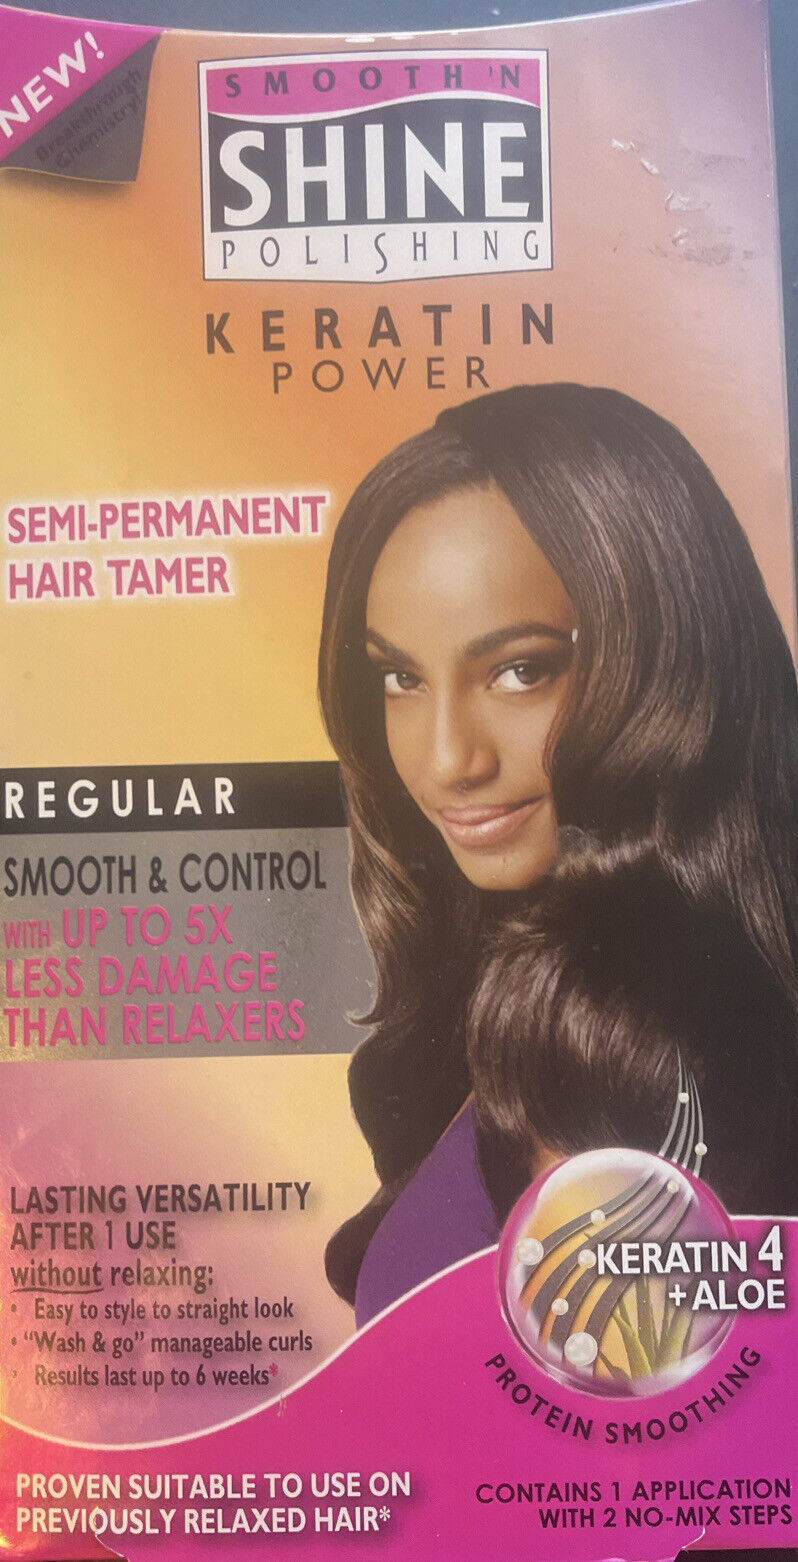 Smooth N Shine Polishing Keratin Power Semi-Permanent Hair Tamer Kit -  REGULAR | eBay